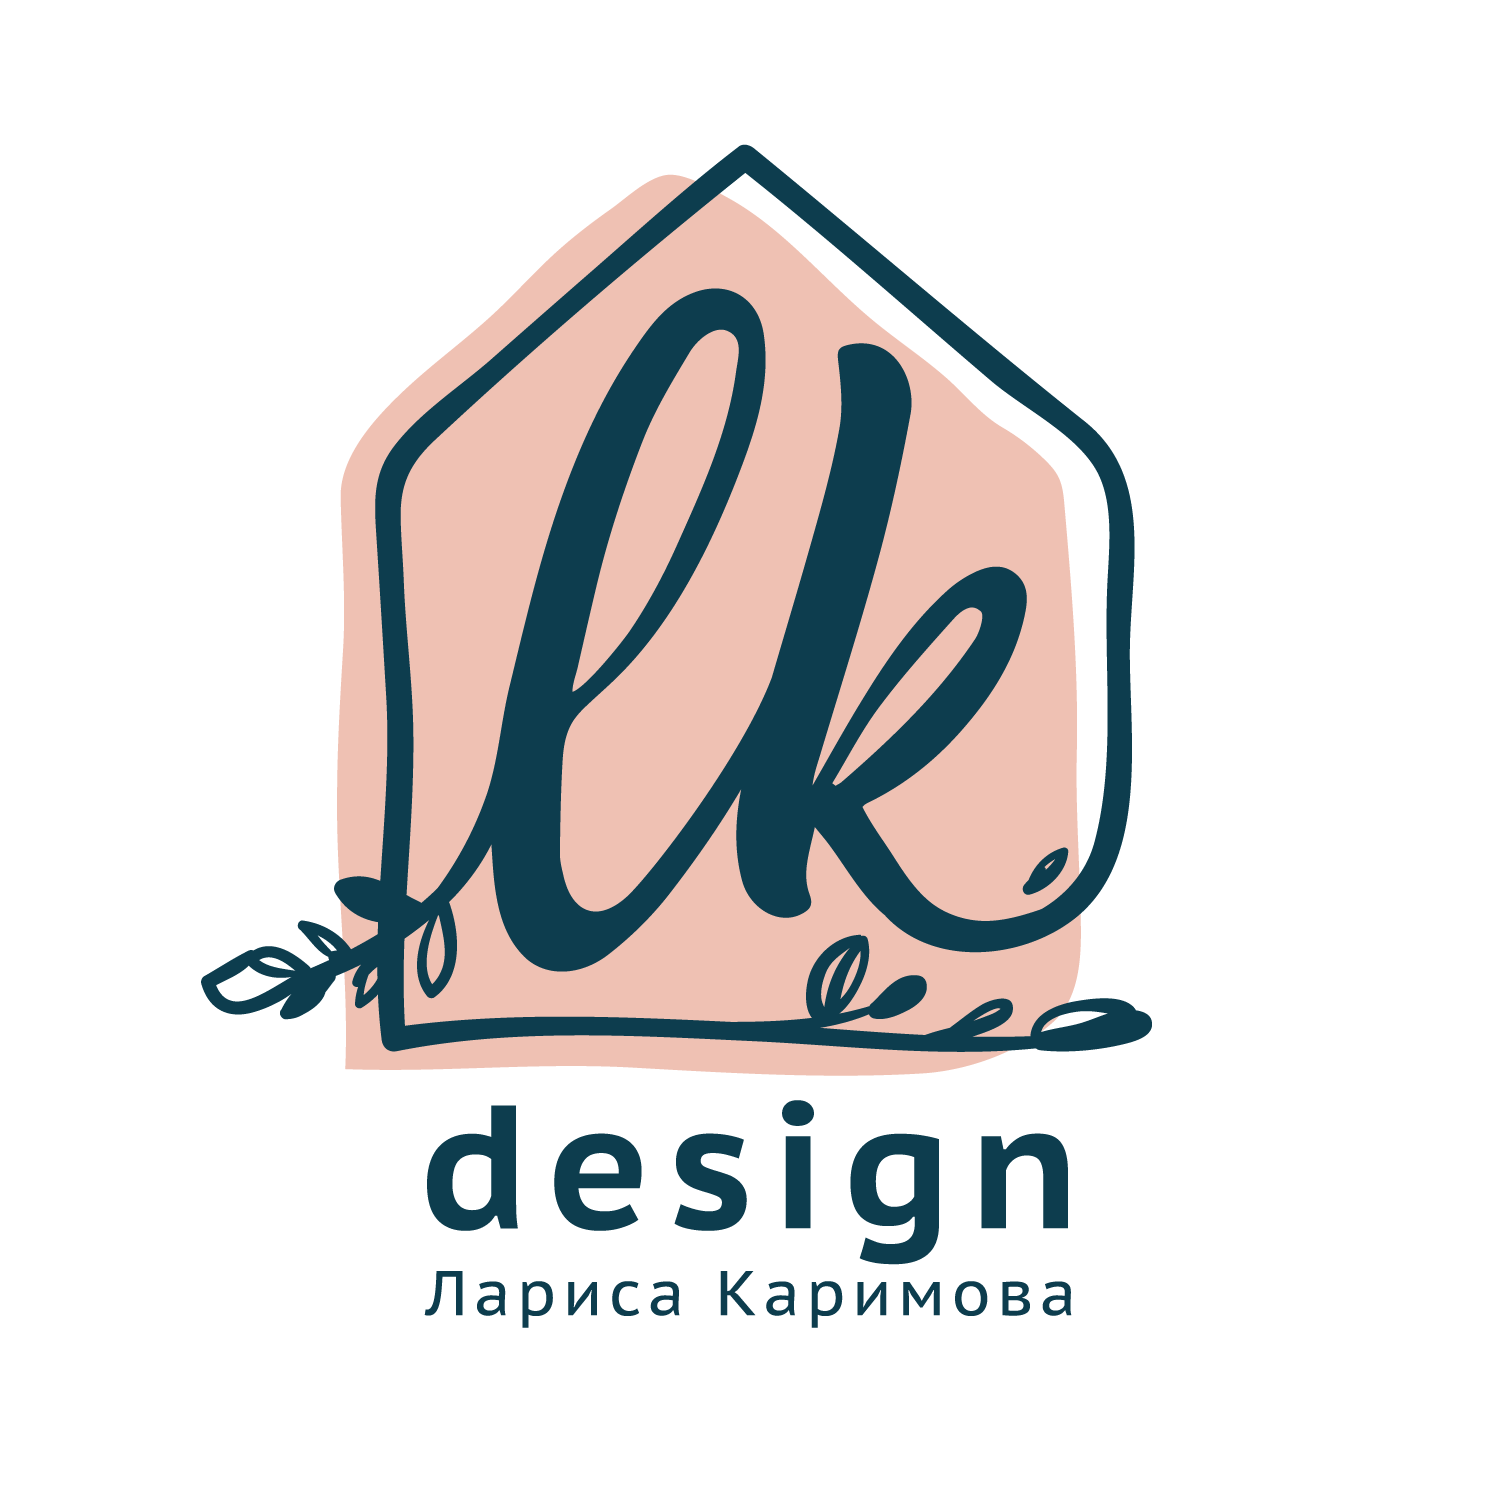 LK design